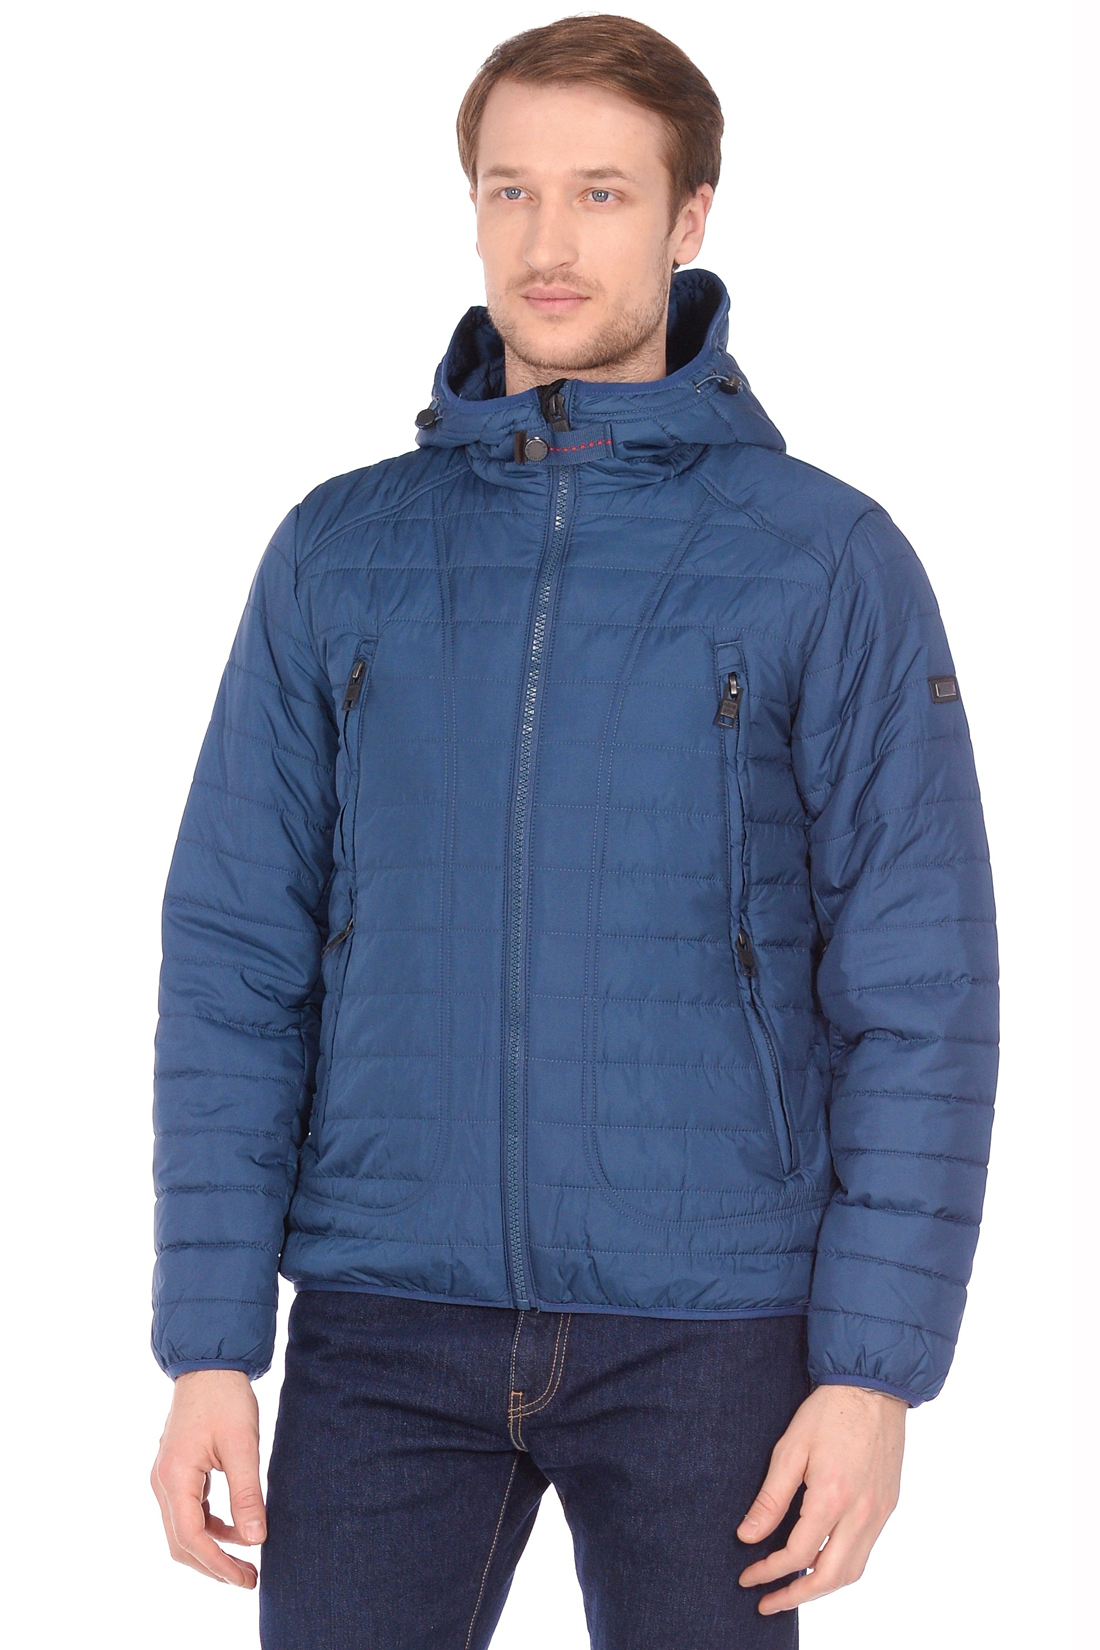 Куртка с двумя линиями карманов (арт. baon B539007), размер XXL, цвет синий Куртка с двумя линиями карманов (арт. baon B539007) - фото 6